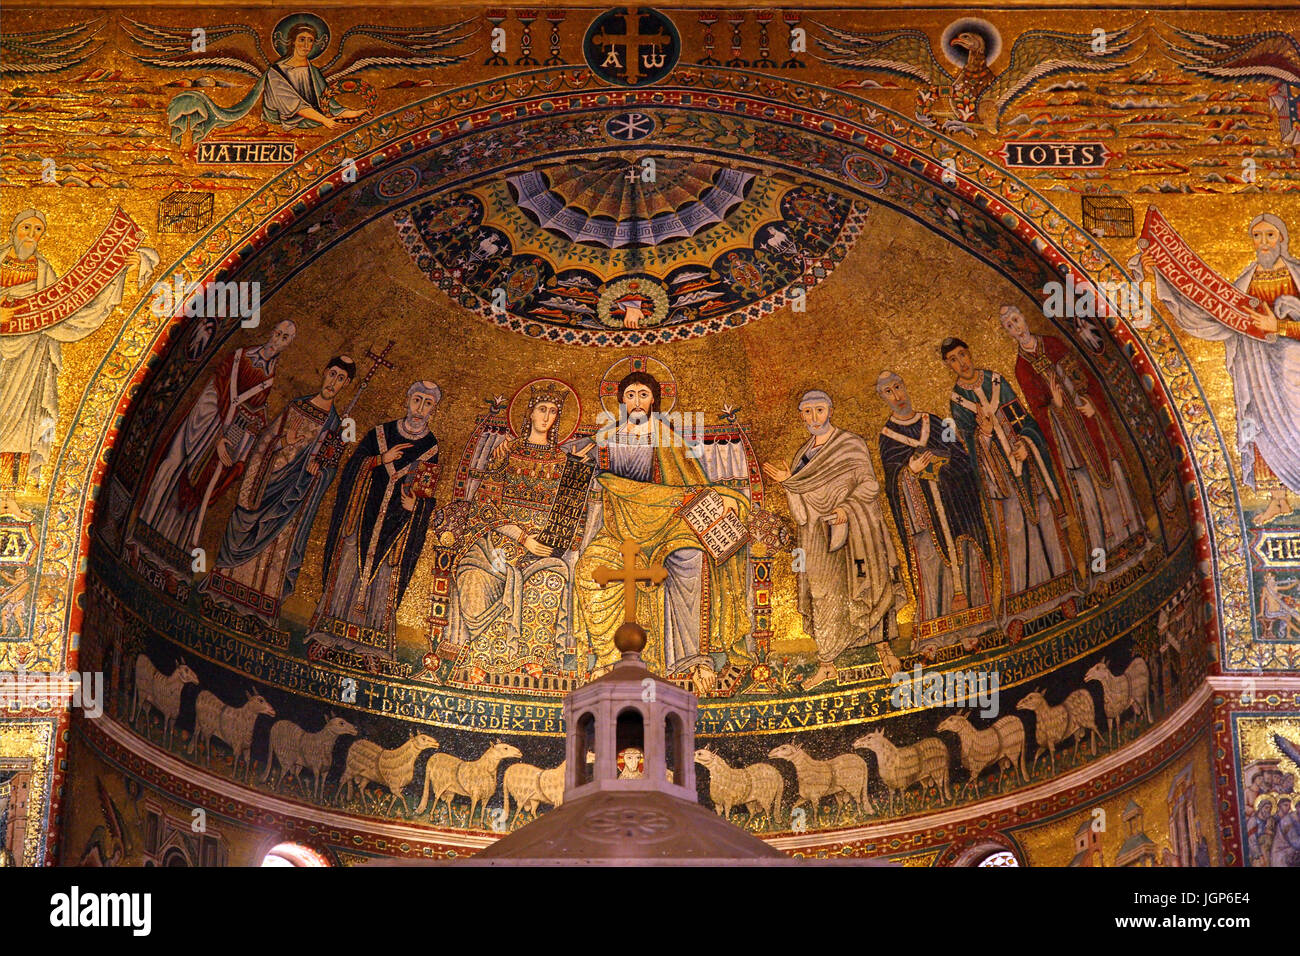 The amazing mosaics in the apse of the Basilica di Santa Maria in Trastevere, Rome, Italy. Stock Photo